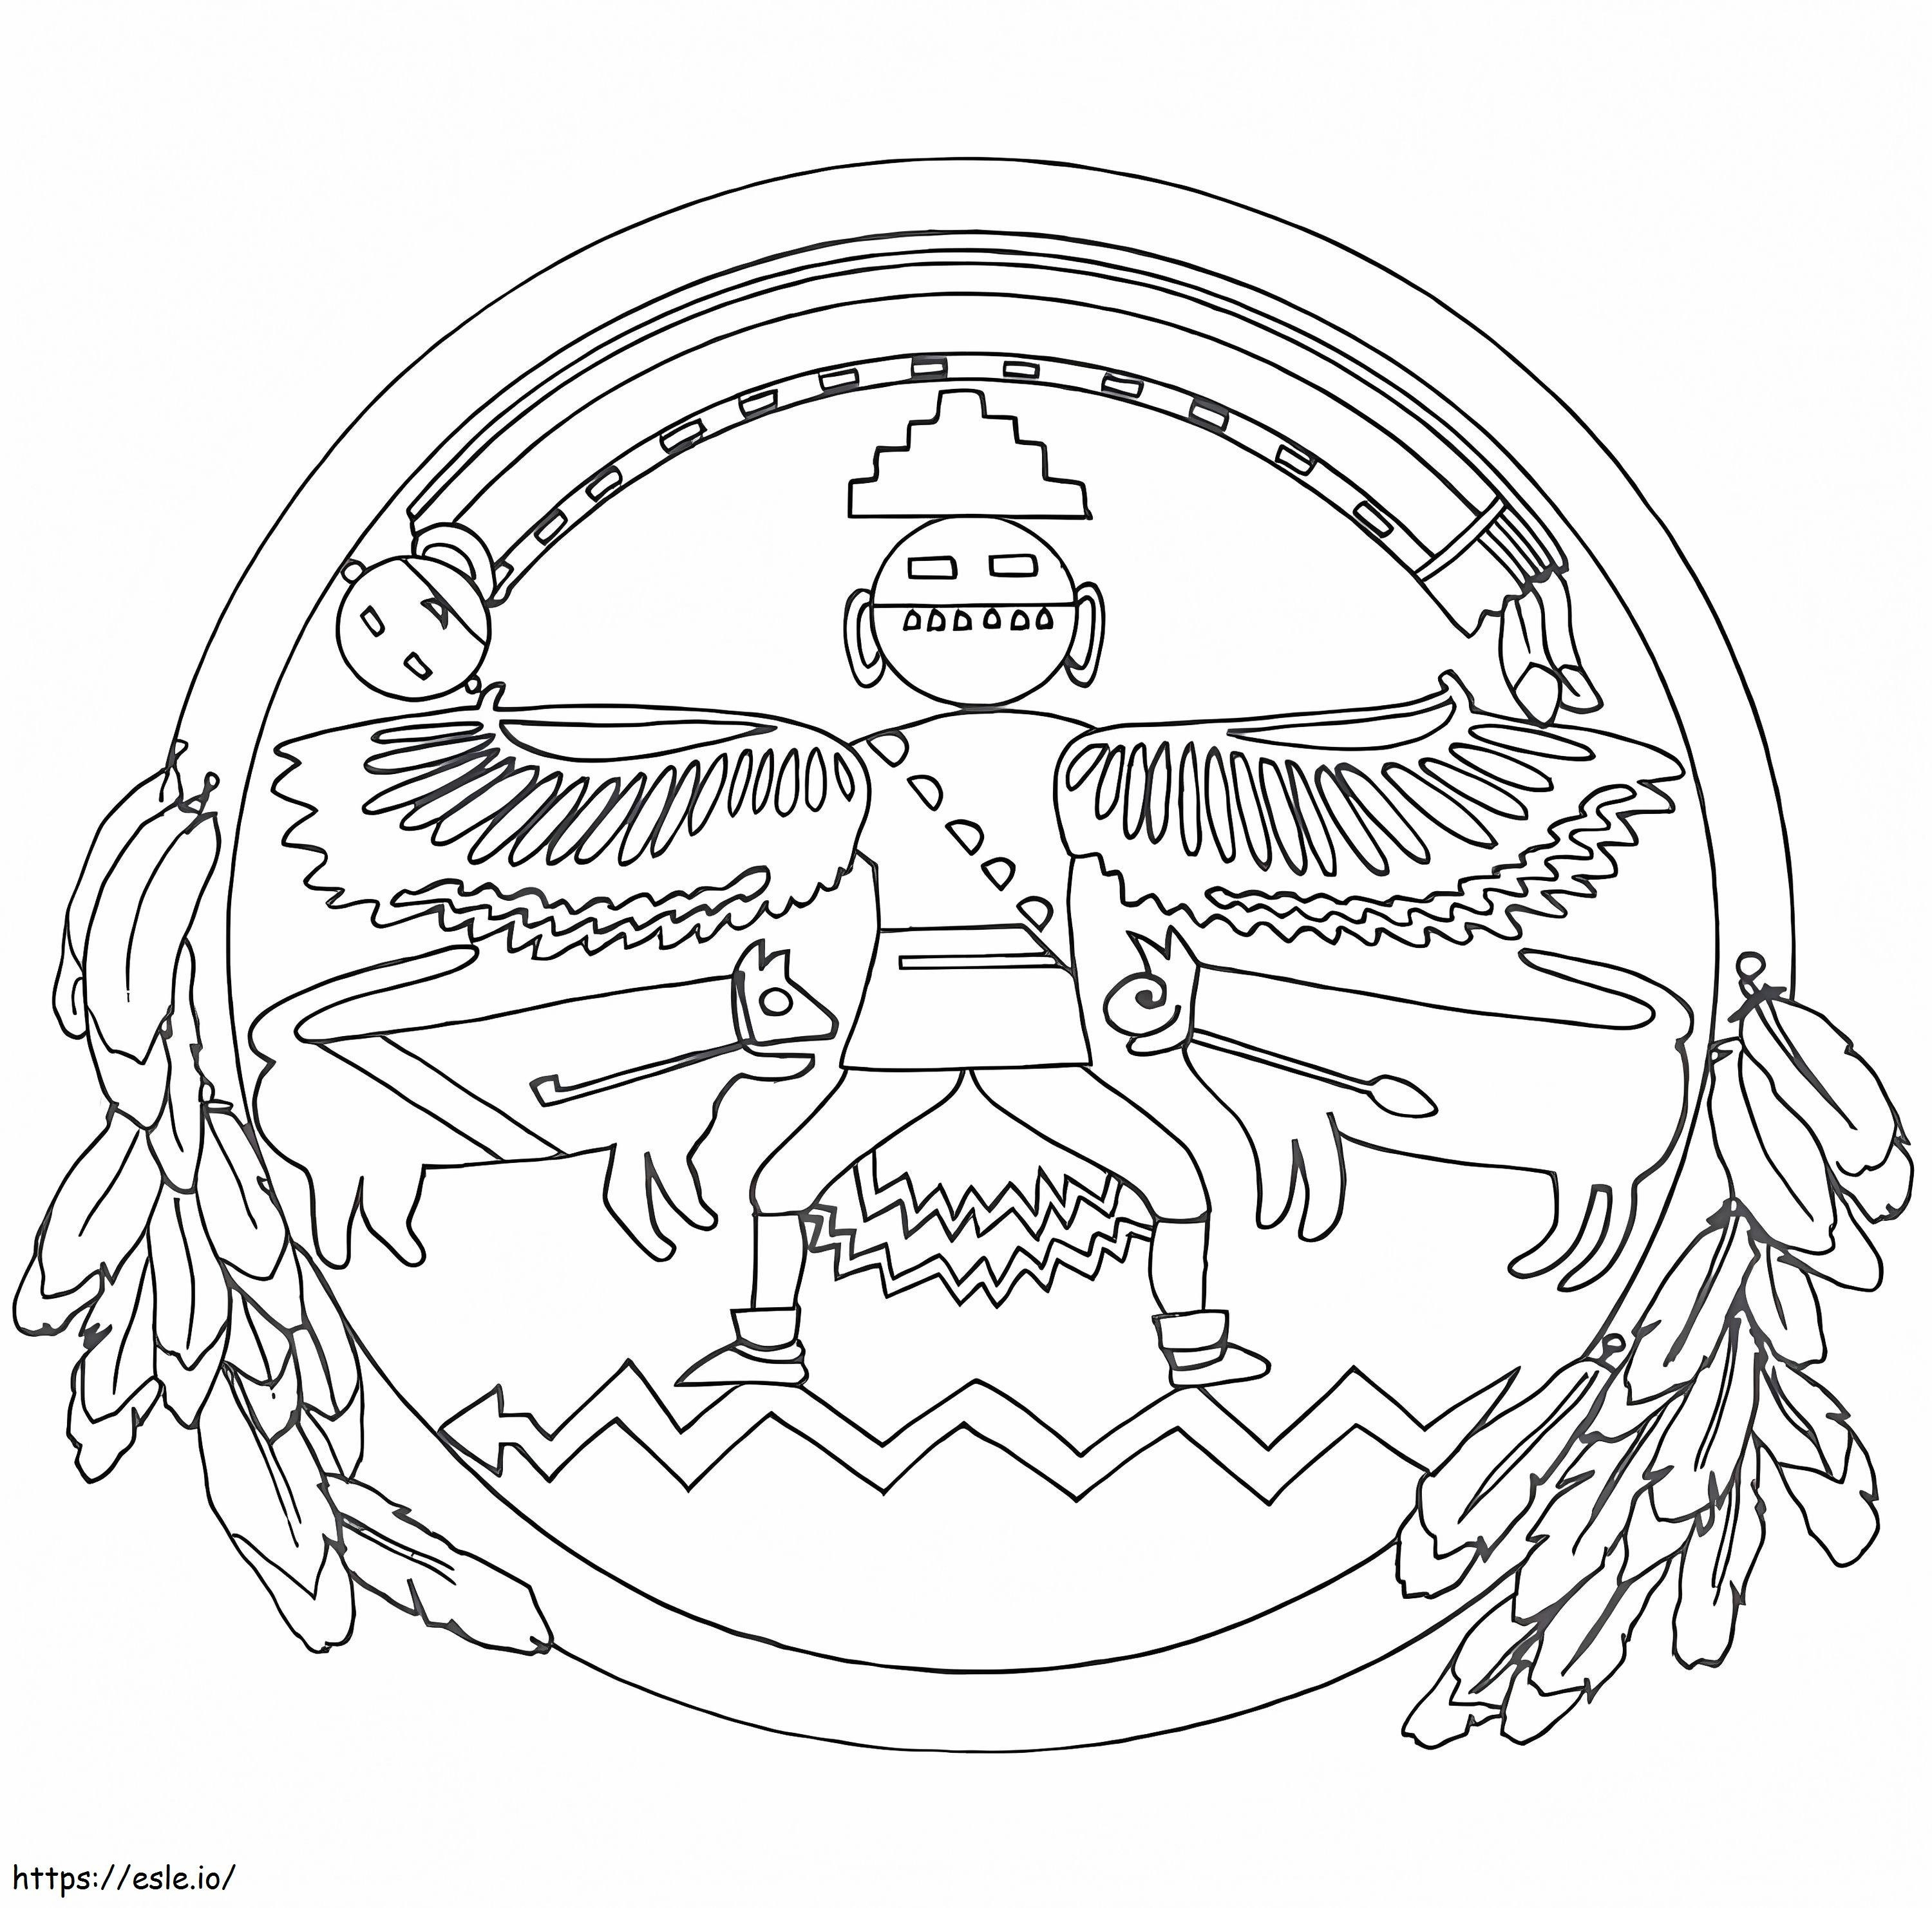 Mandala do nativo americano para colorir